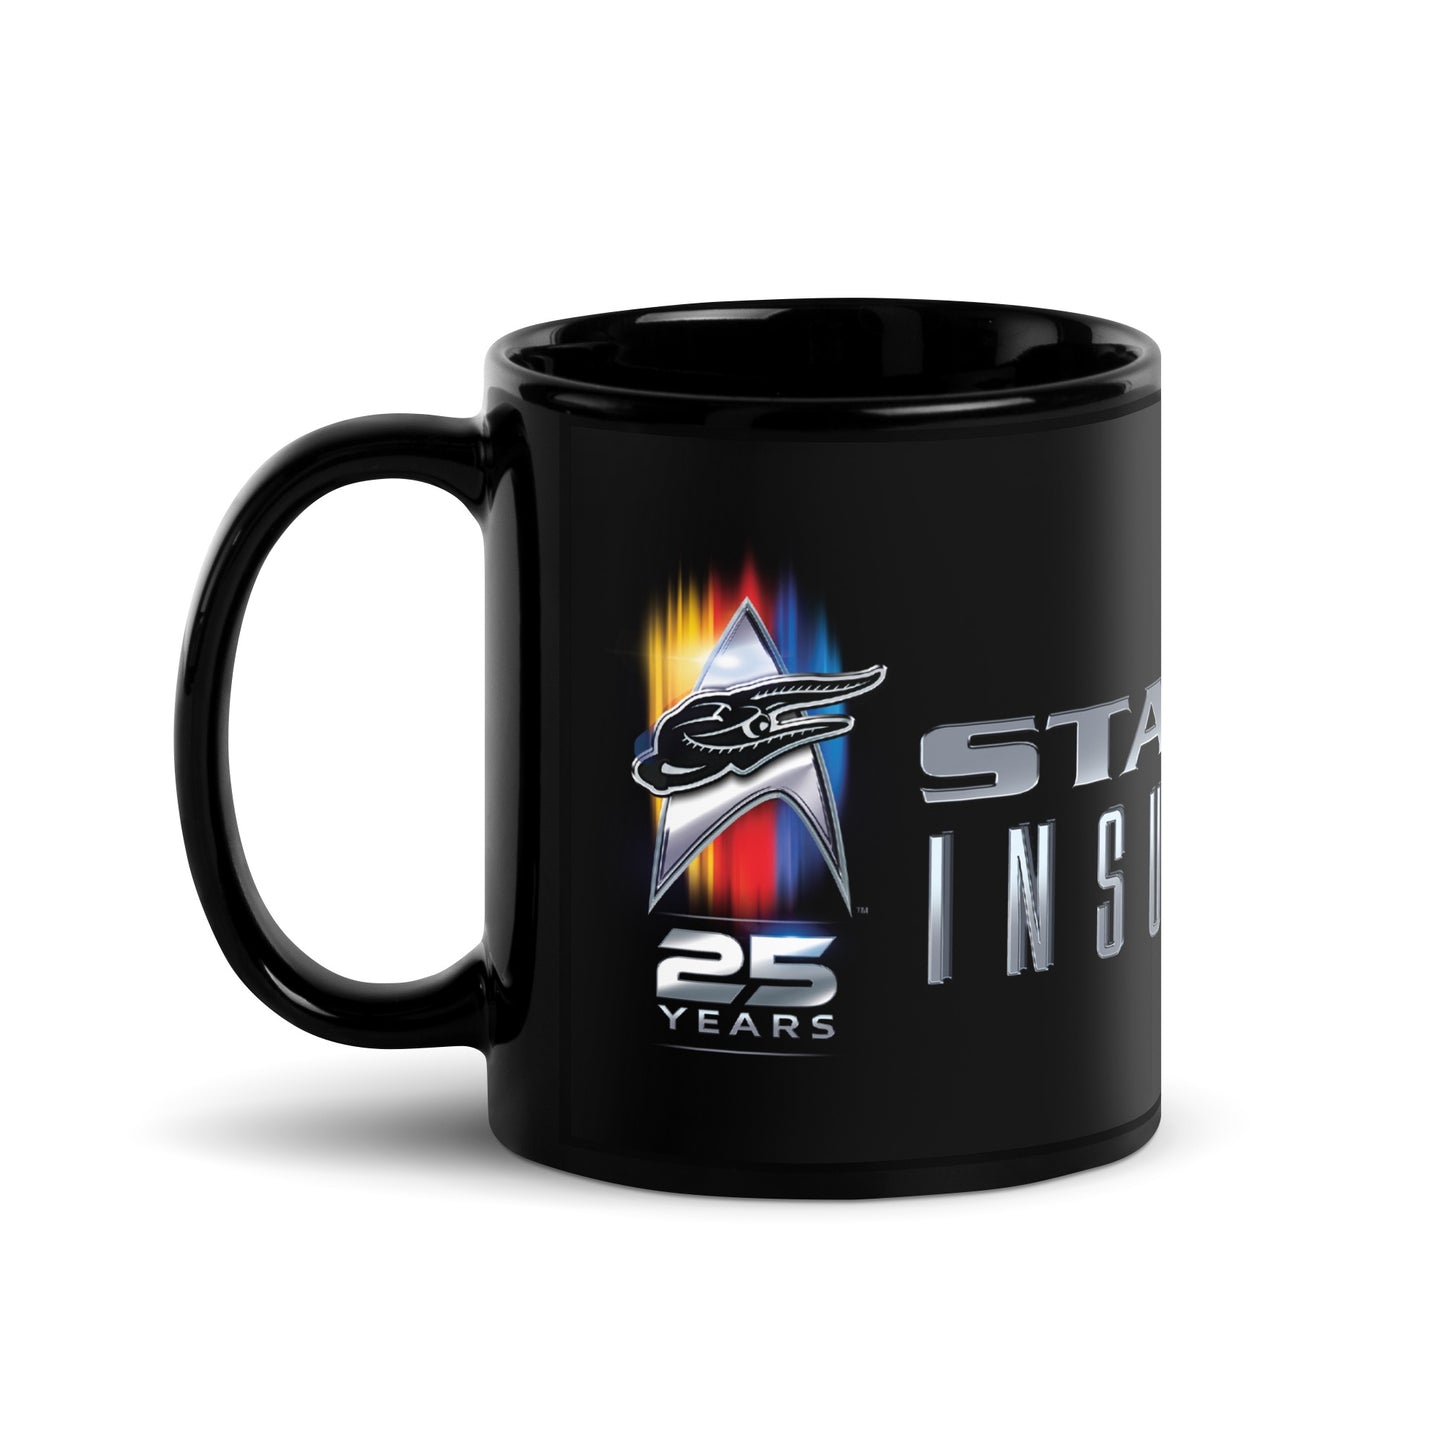 Star Trek IX: Insurrection Mug noir 25e anniversaire